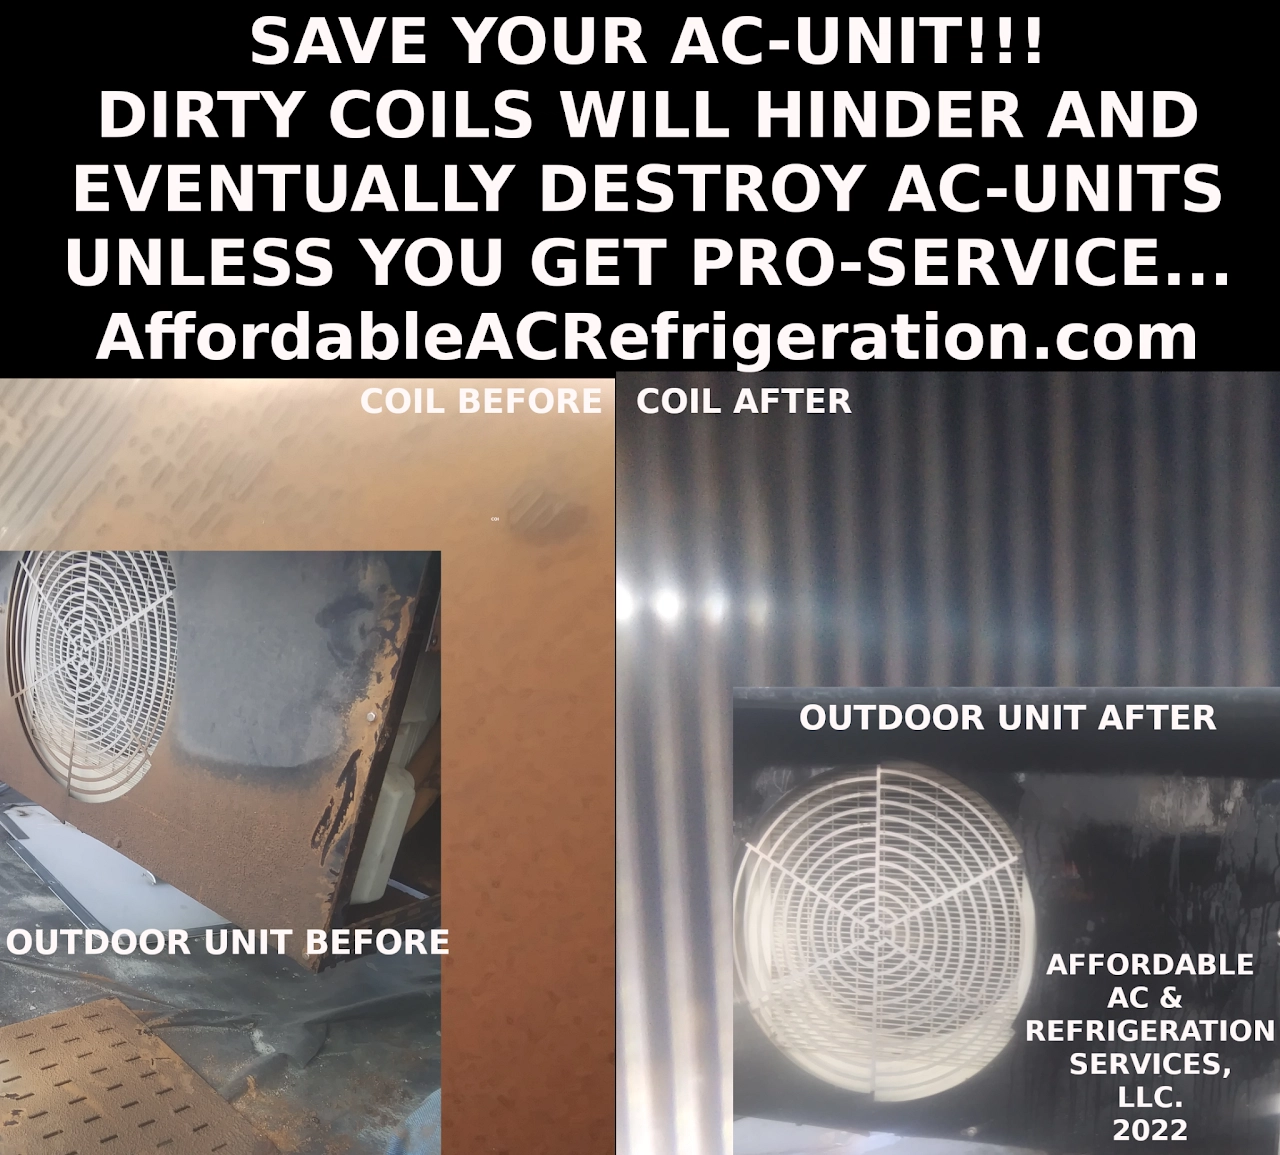 Affordable AC & Refrigeration Services Logo